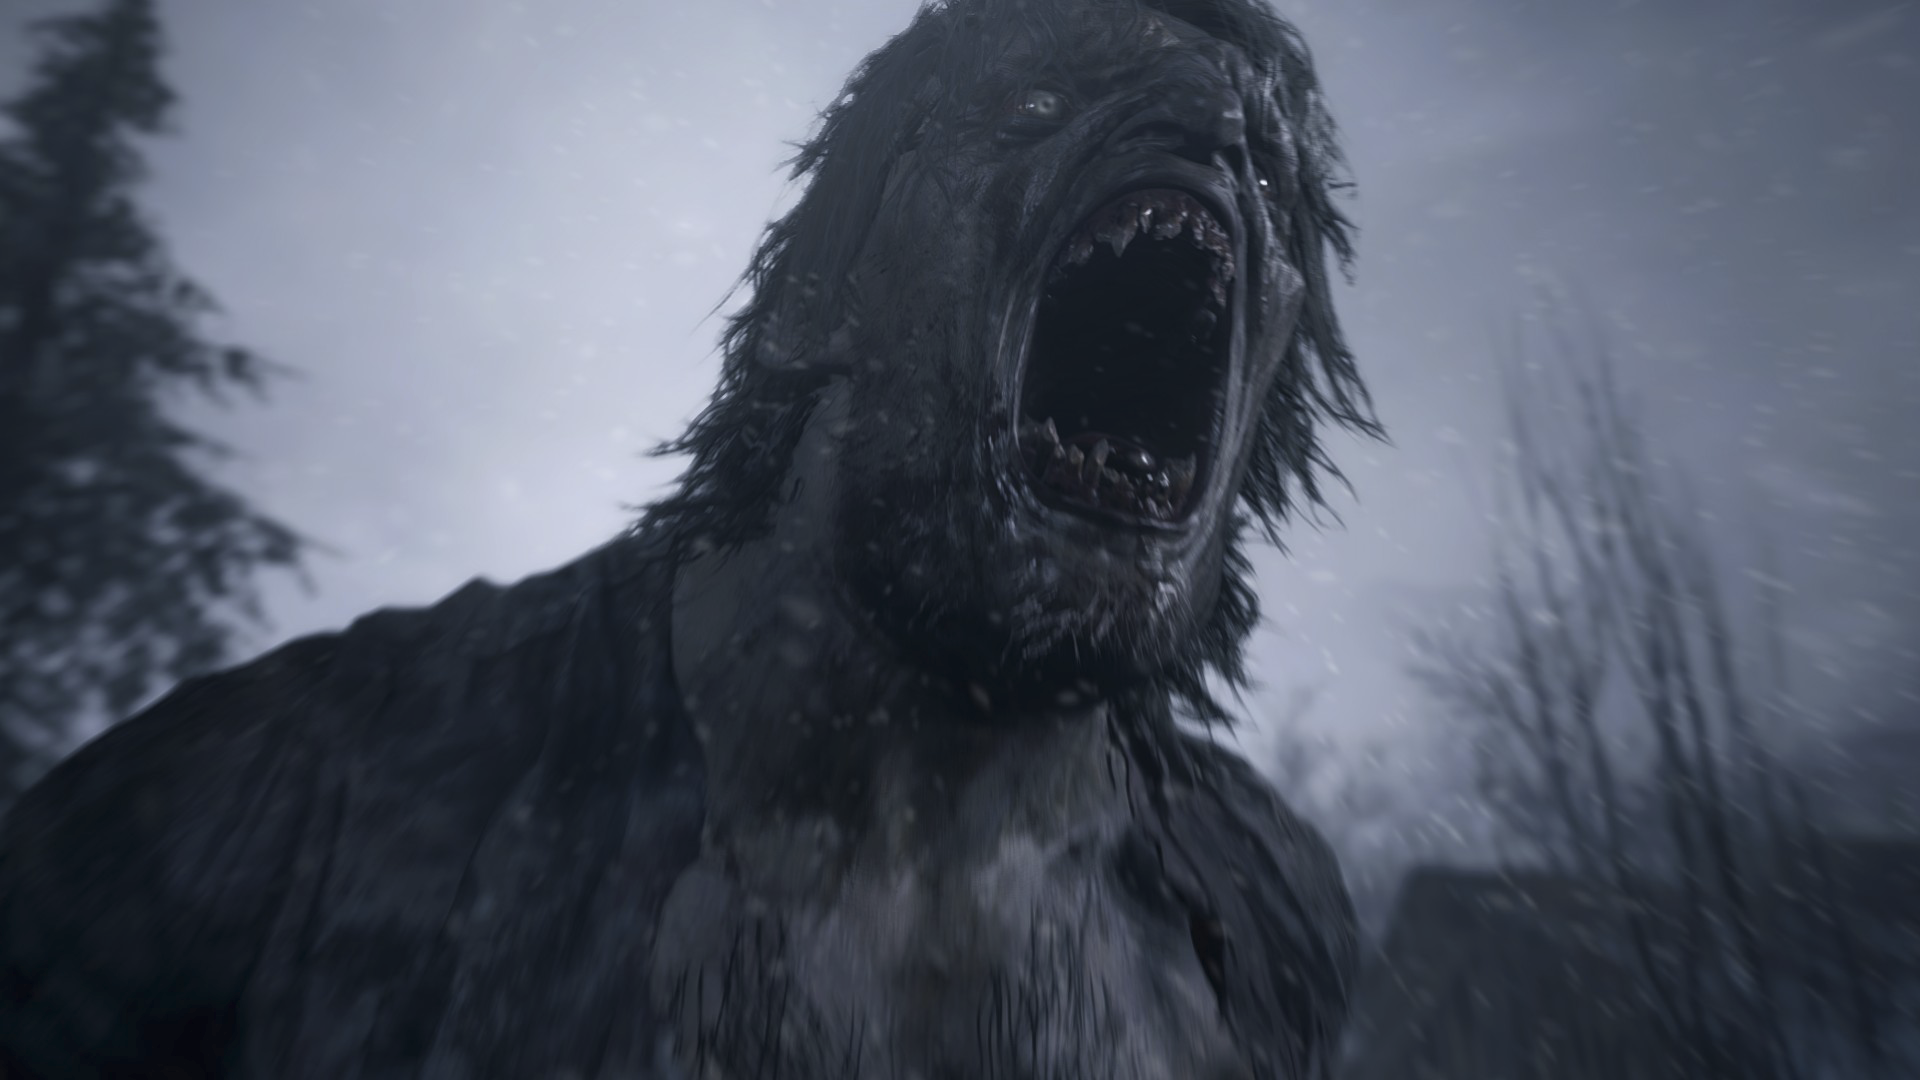 Resident Evil Village στιγμιότυπο προώθησης παιχνιδιού που απεικονίζει έναν κτηνώδη ανθρωποειδή χαρακτήρα να ουρλιάζει.